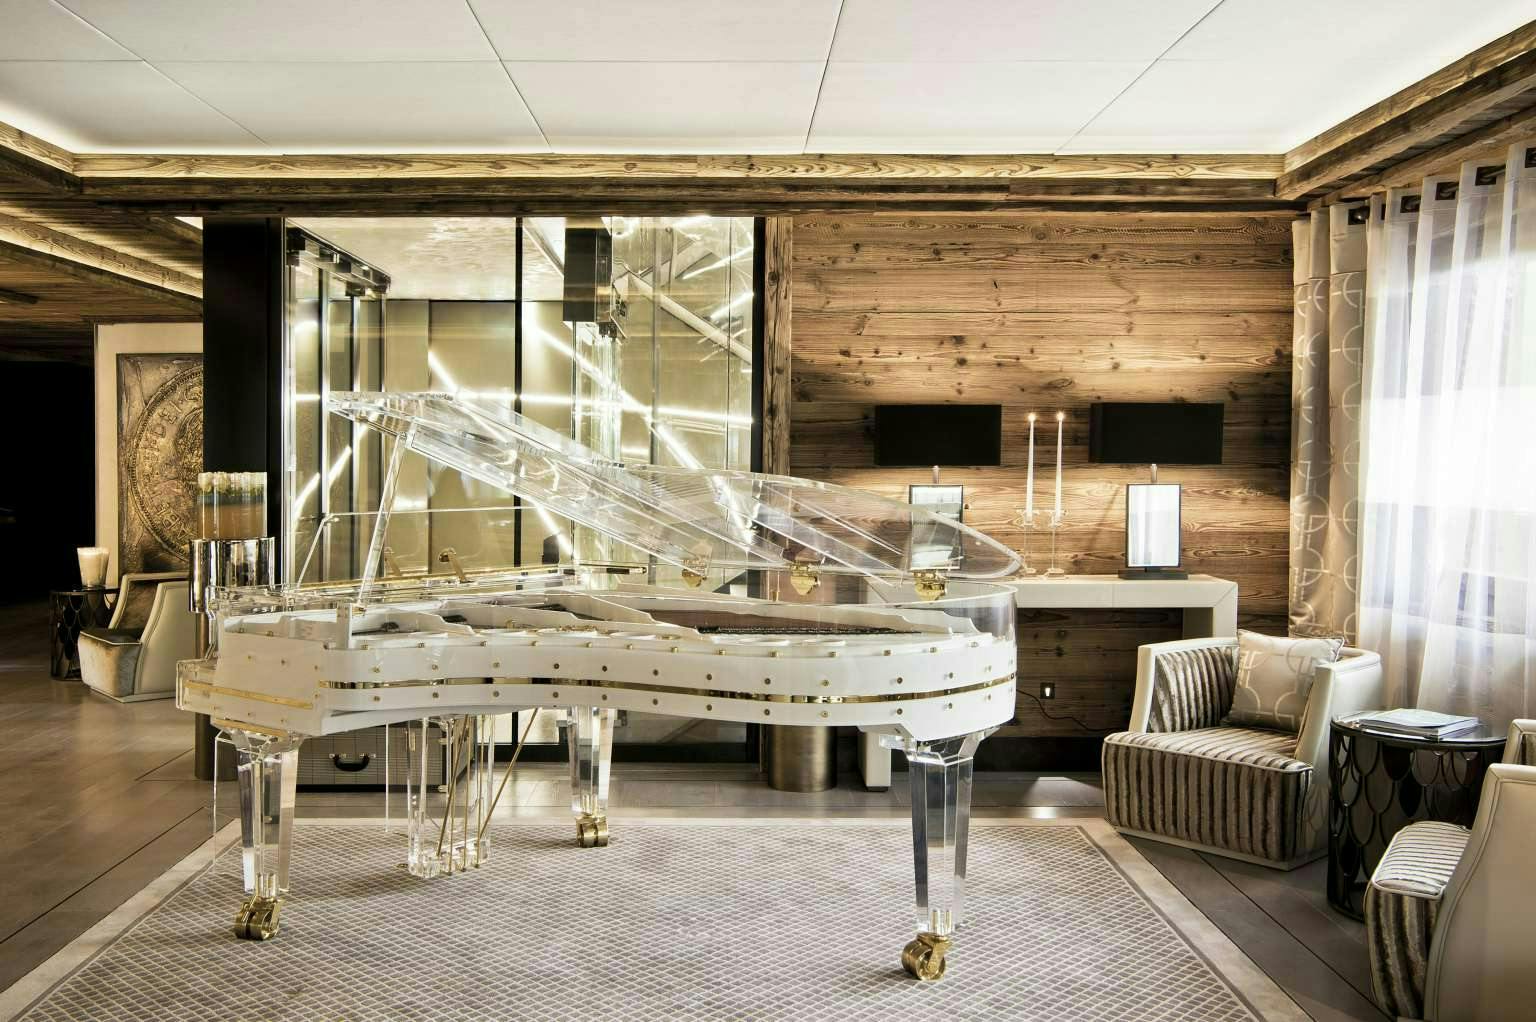 grand piano musical instrument leisure activities piano flooring furniture floor